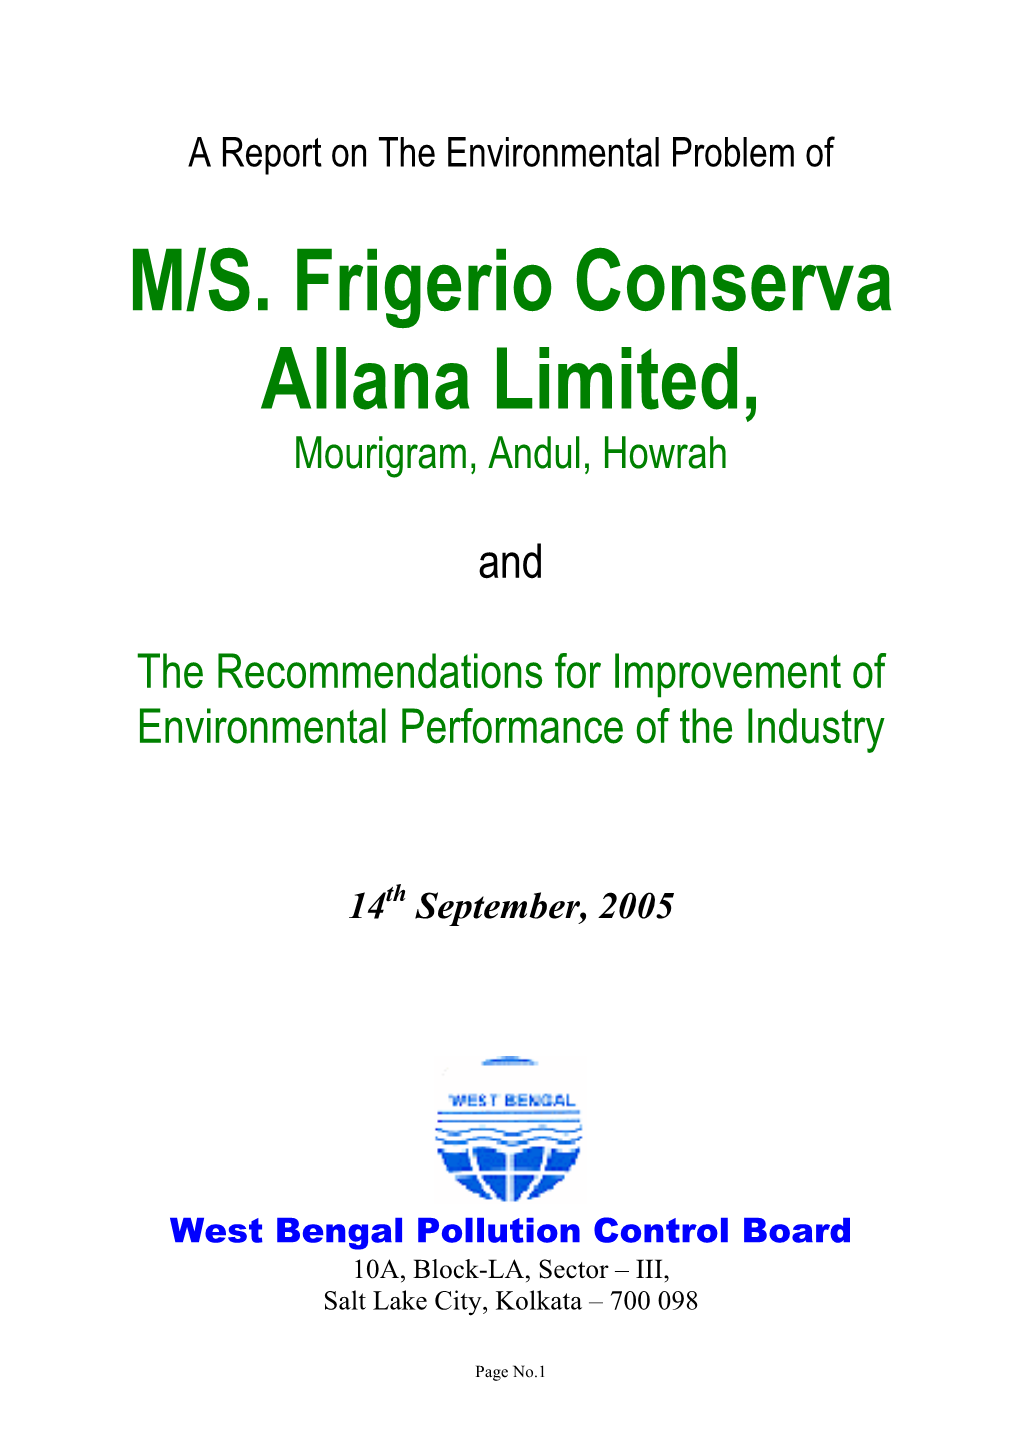 M/S. Frigerio Conserva Allana Limited, Mourigram, Andul, Howrah